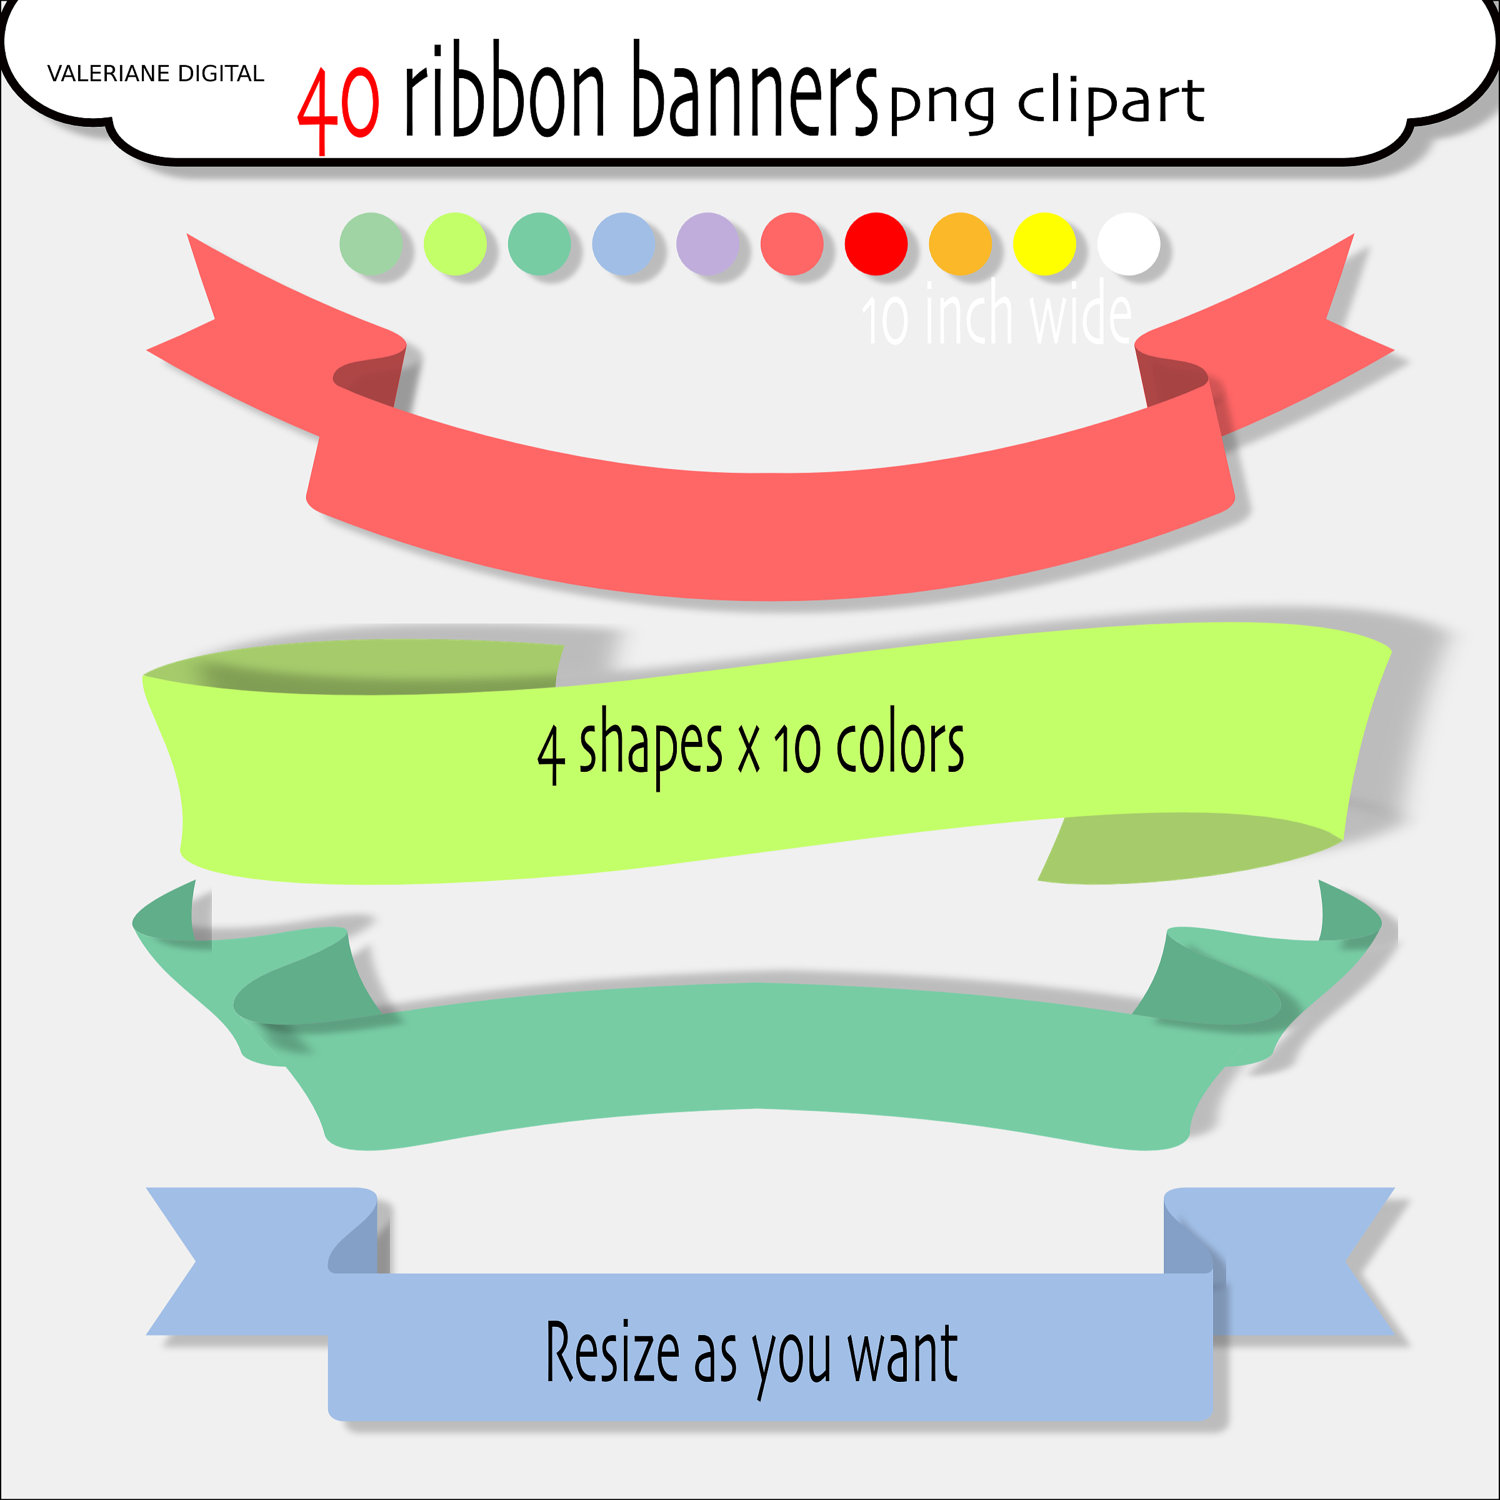 40 PNG digital ribbon or banner clipart by ValerianeDigital